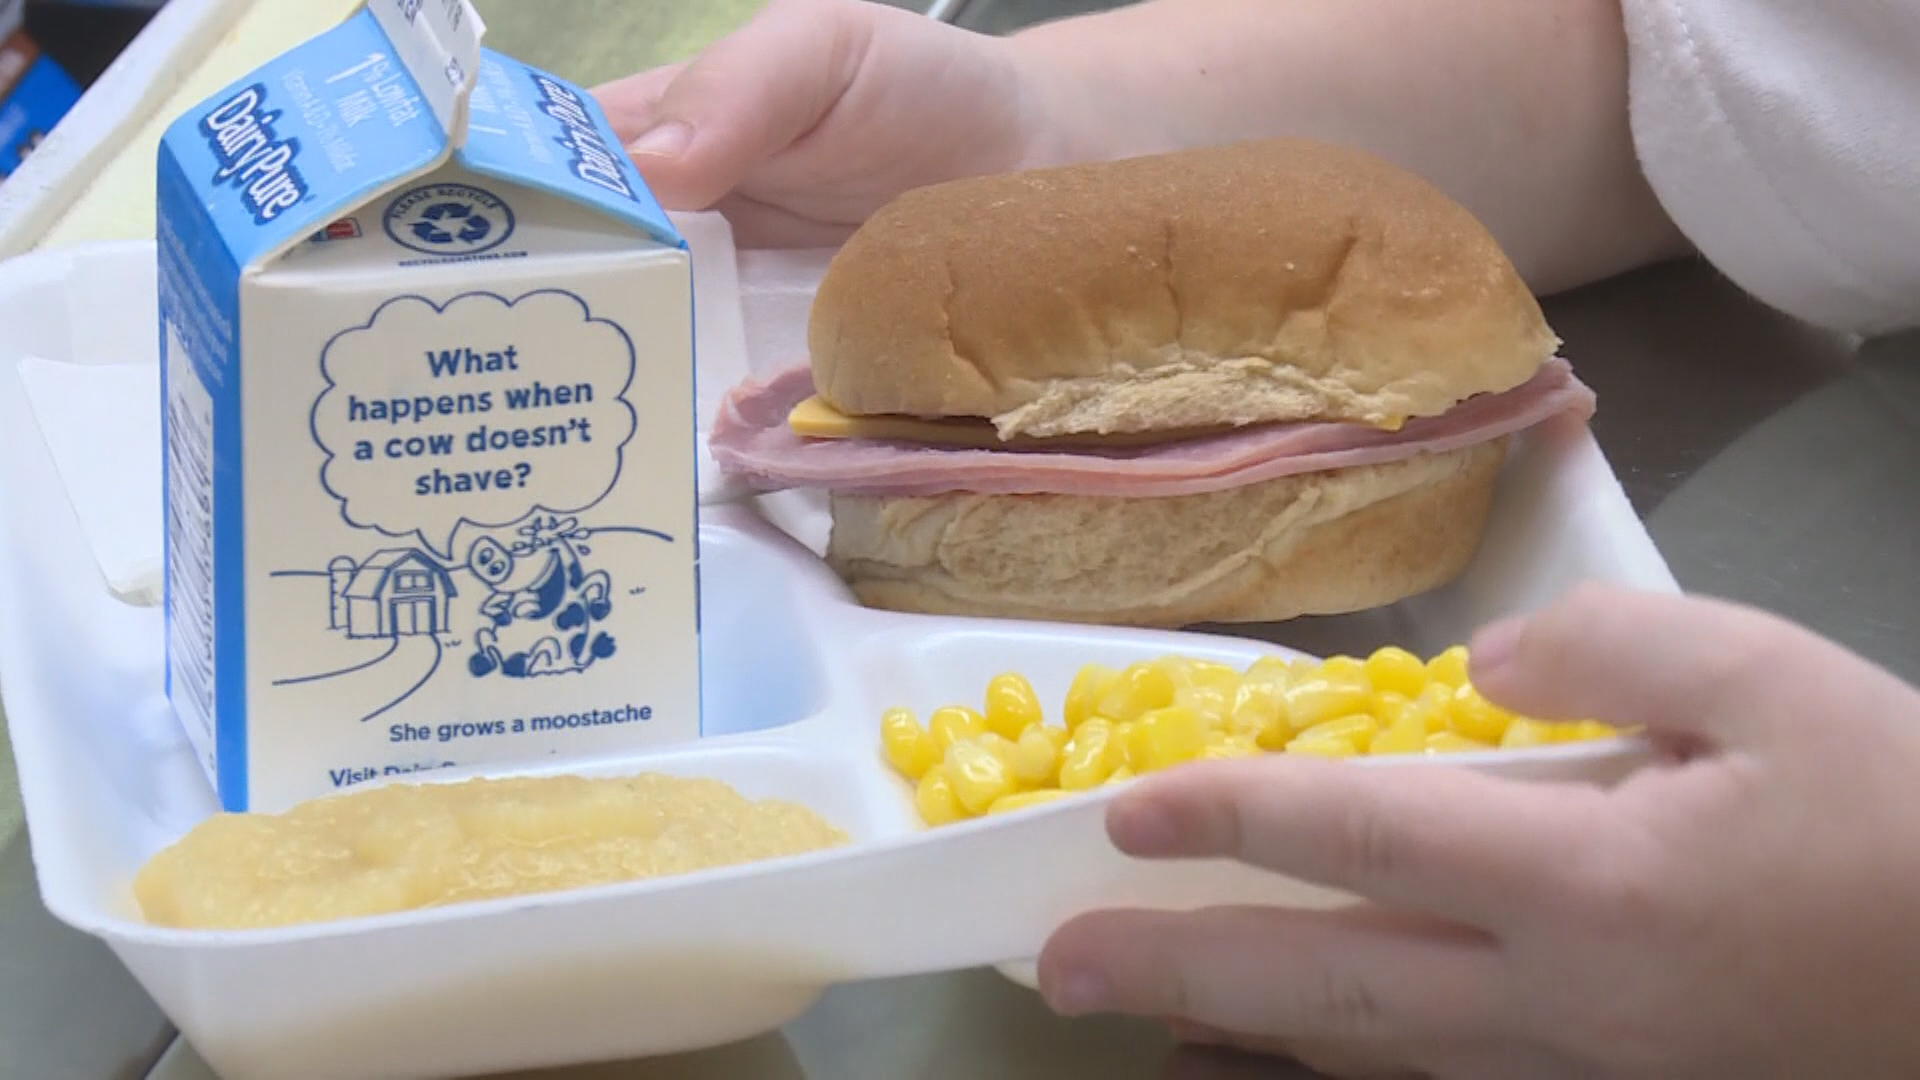 usda healthy school lunches